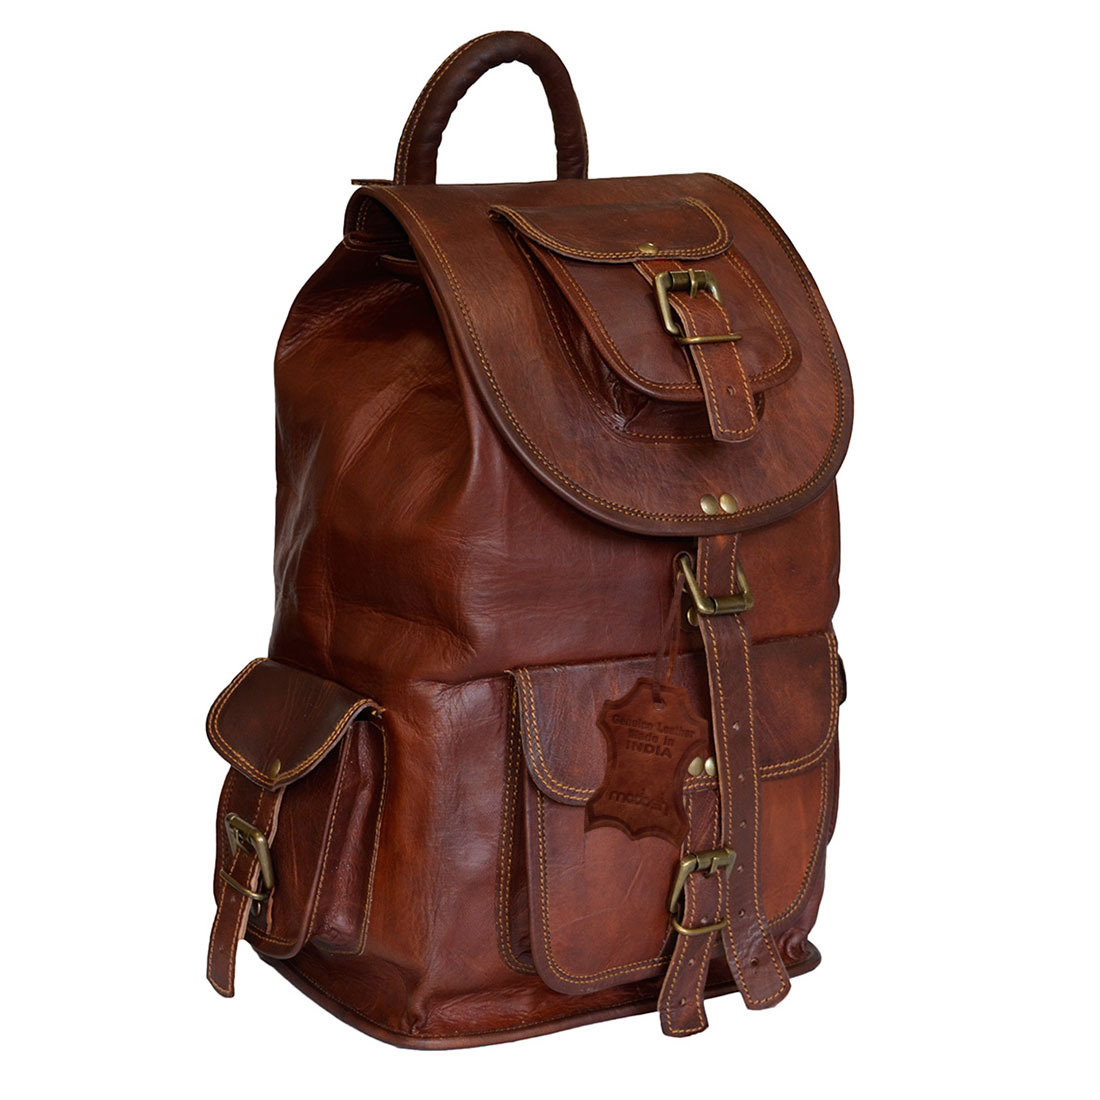 Madosh Genuine Leather Backpacks Hiking Rucksack Brown Camping Daypacks Travel Luggage Bag - image 1 of 6